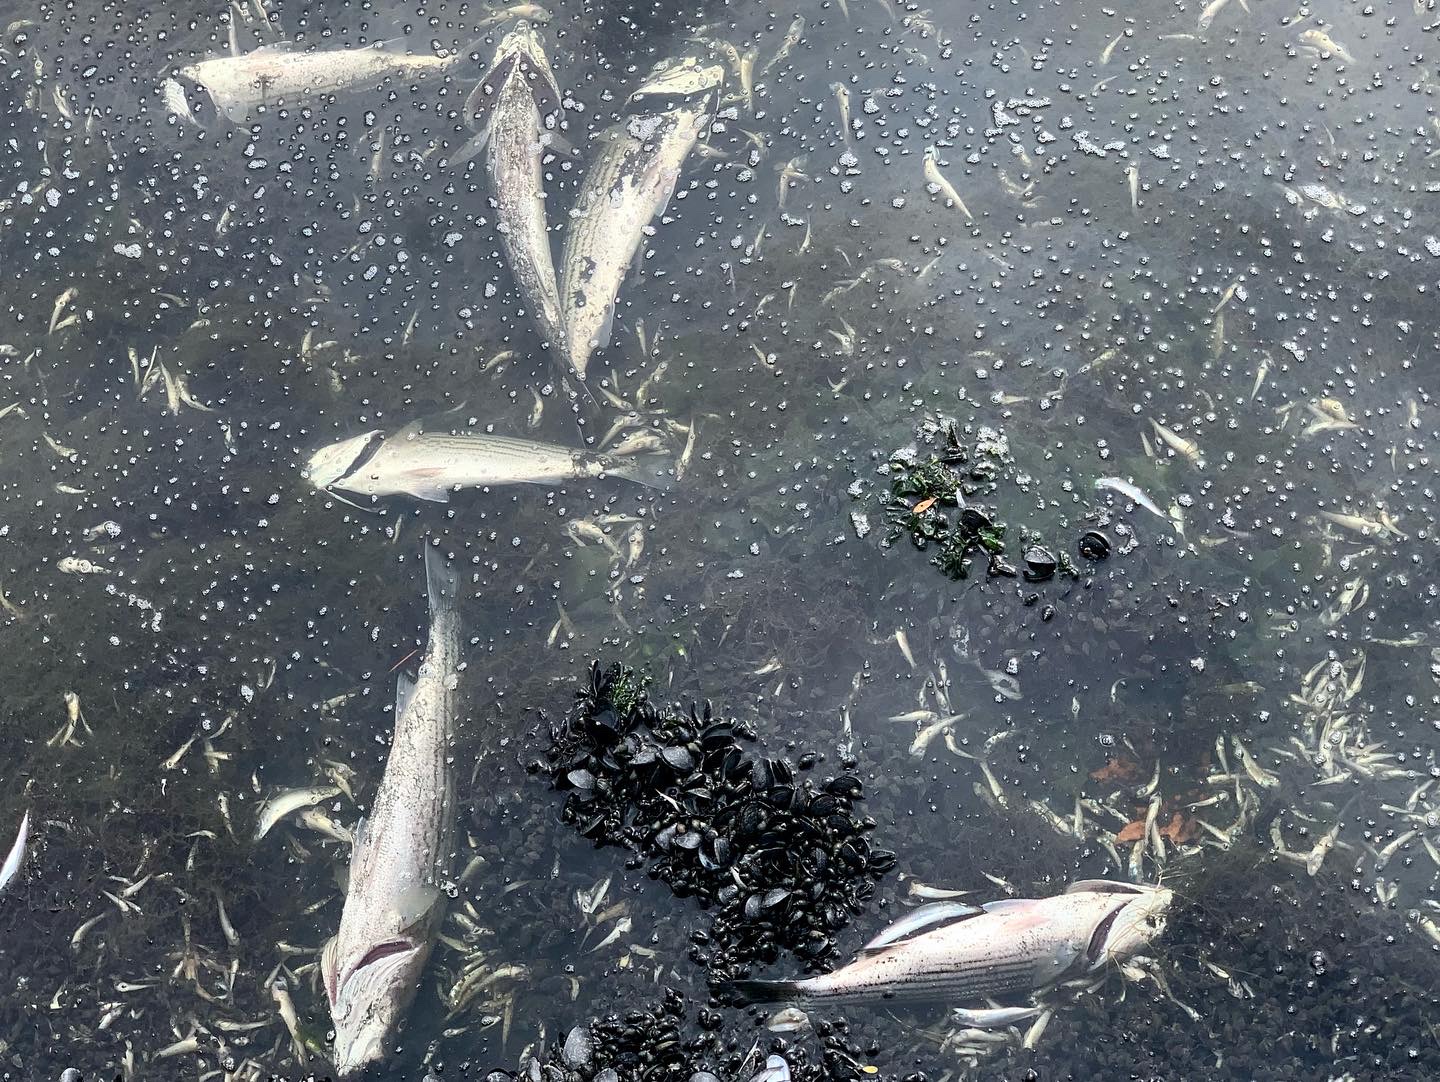 Fish Die-Off in Lake Merritt